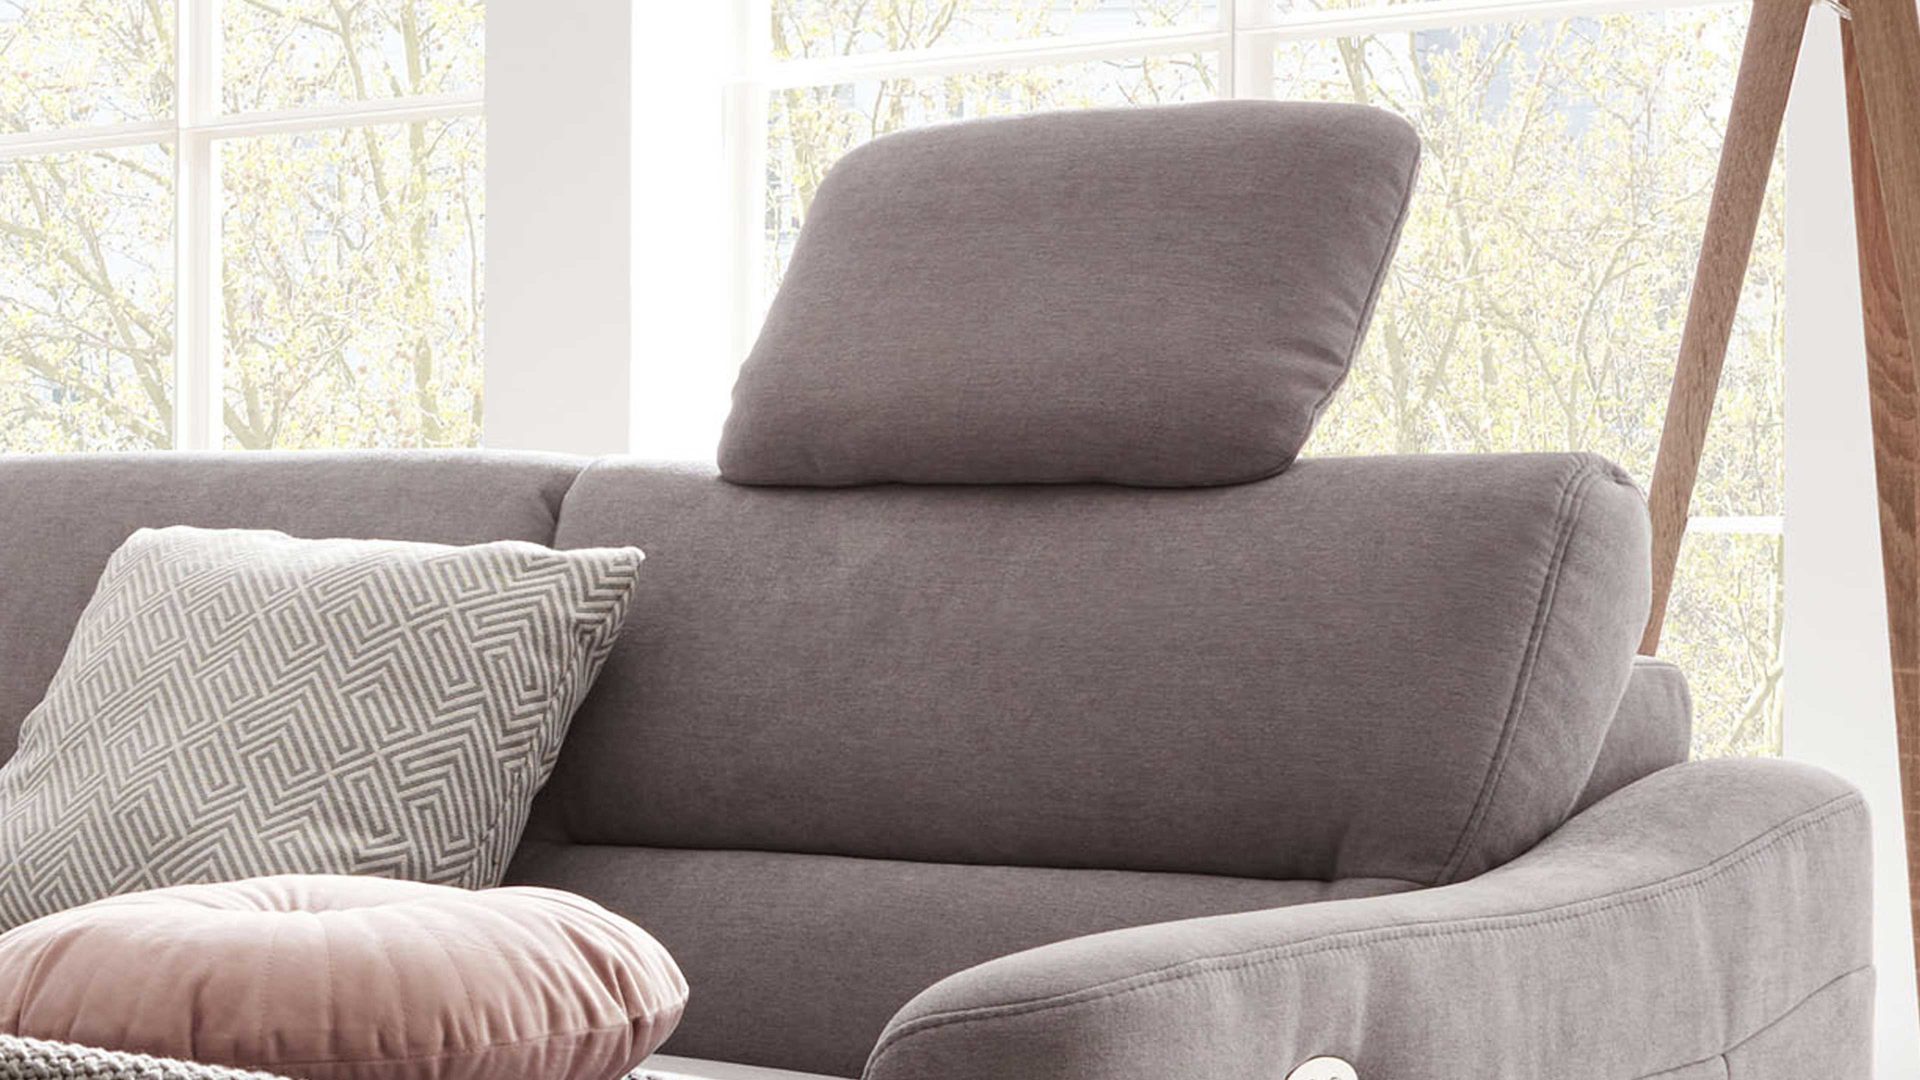 Interliving Sofa Serie 4305 – Comfort-Kopfstütze CKS, silberfarbener Bezug